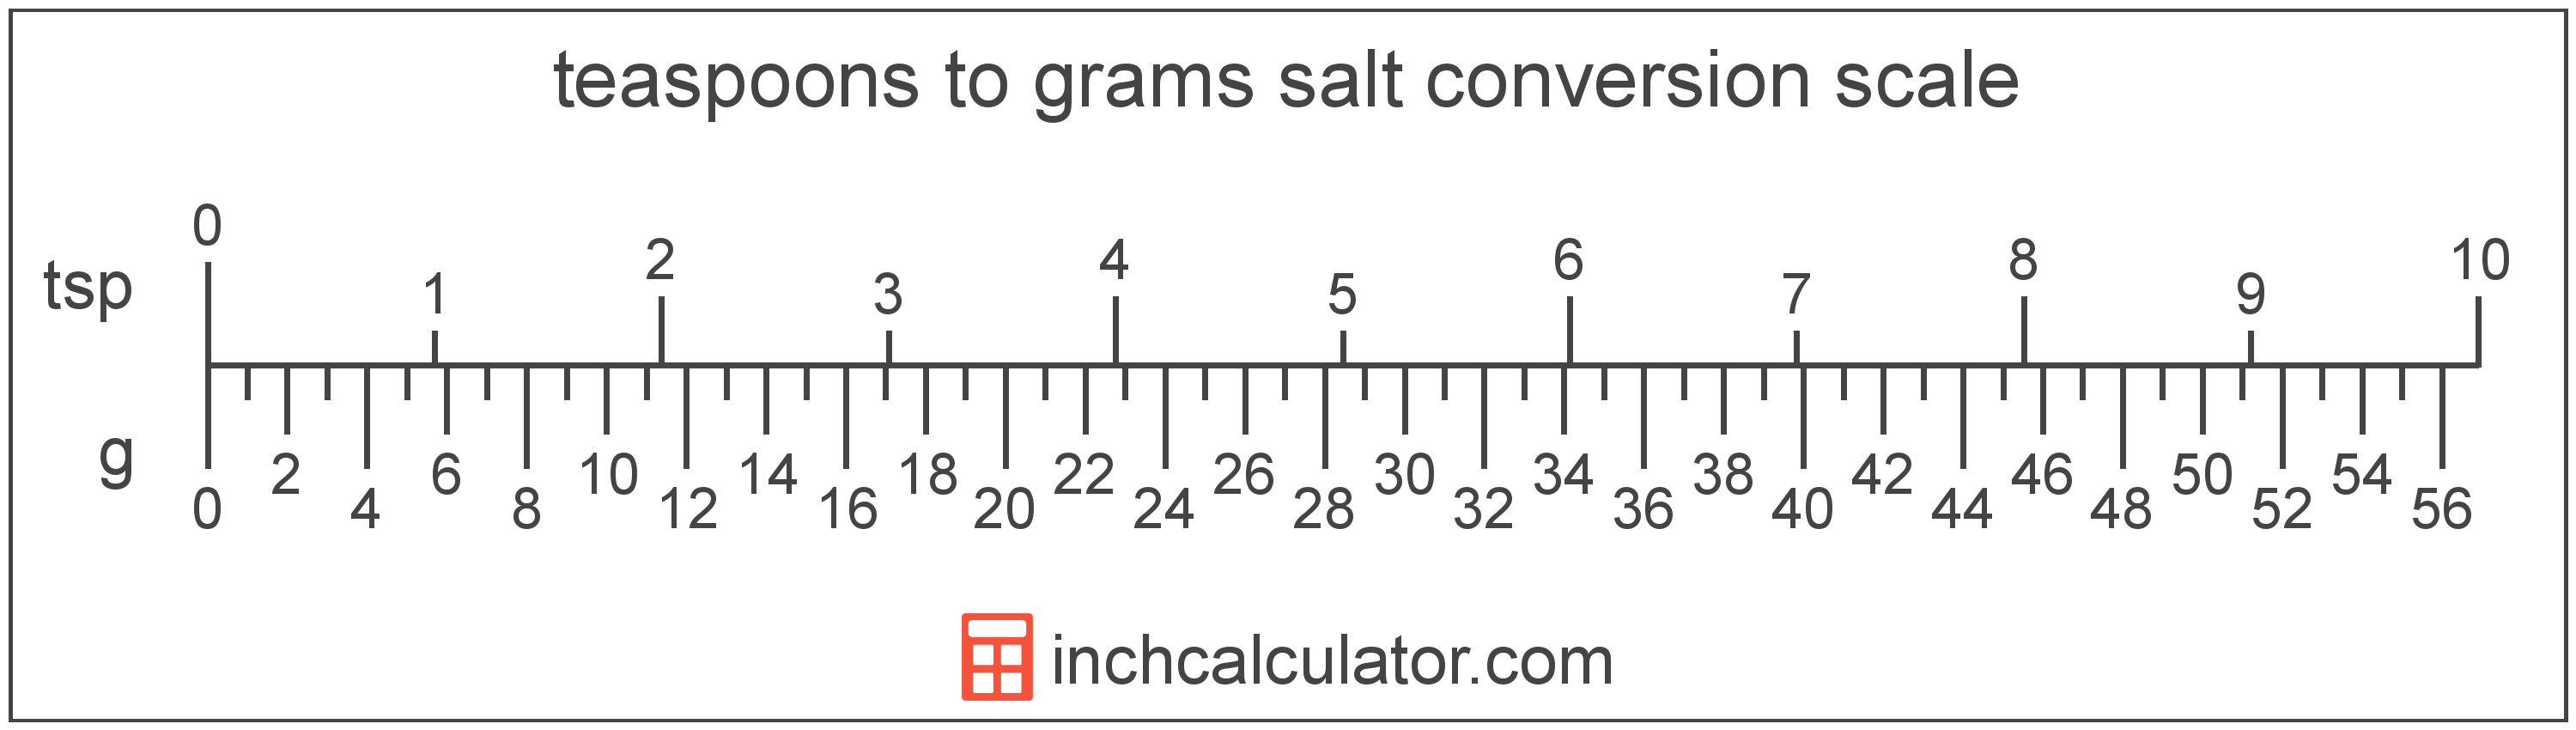 Grains To Grams Conversion Chart